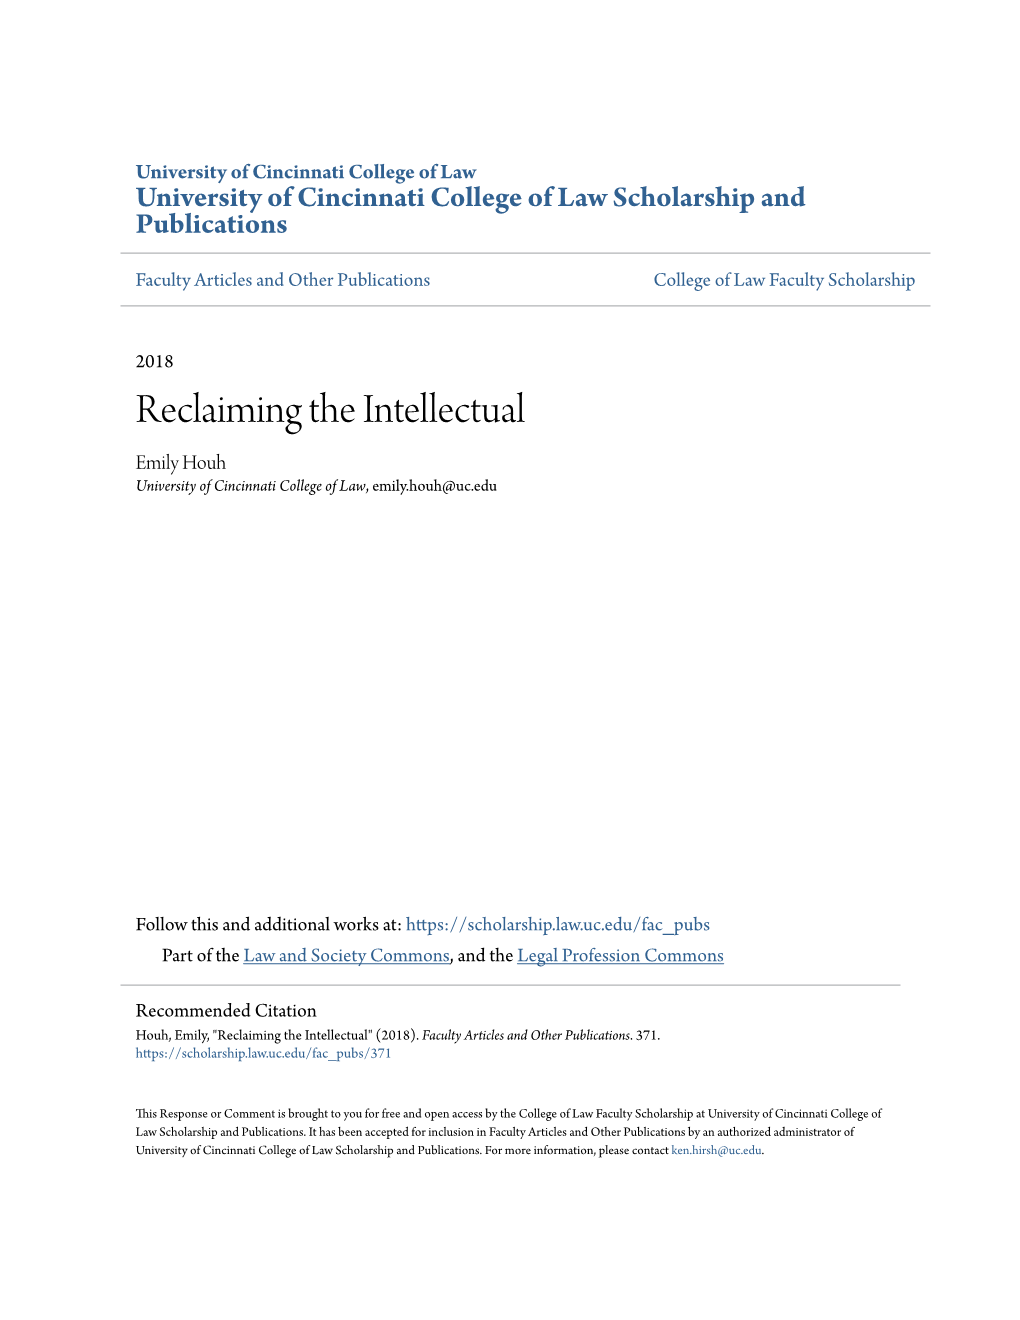 Reclaiming the Intellectual Emily Houh University of Cincinnati College of Law, Emily.Houh@Uc.Edu